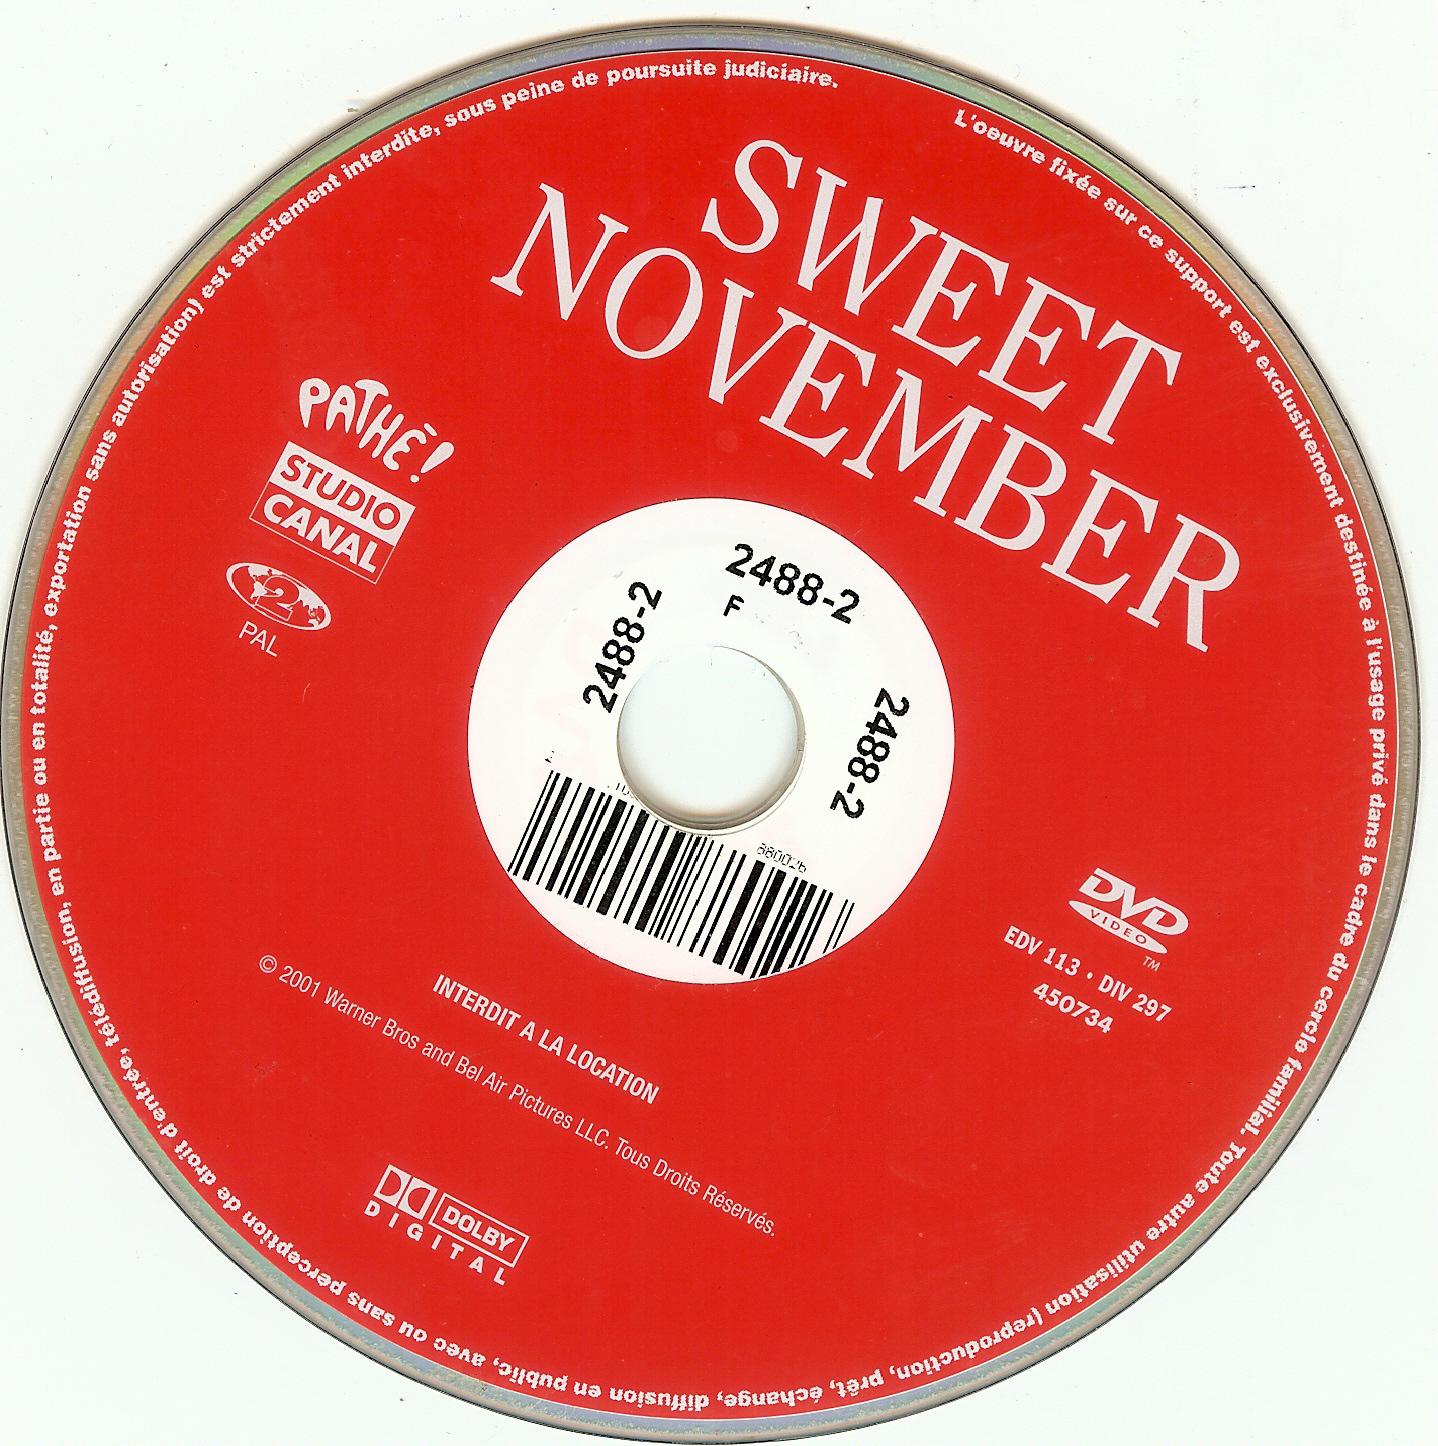 Sweet november